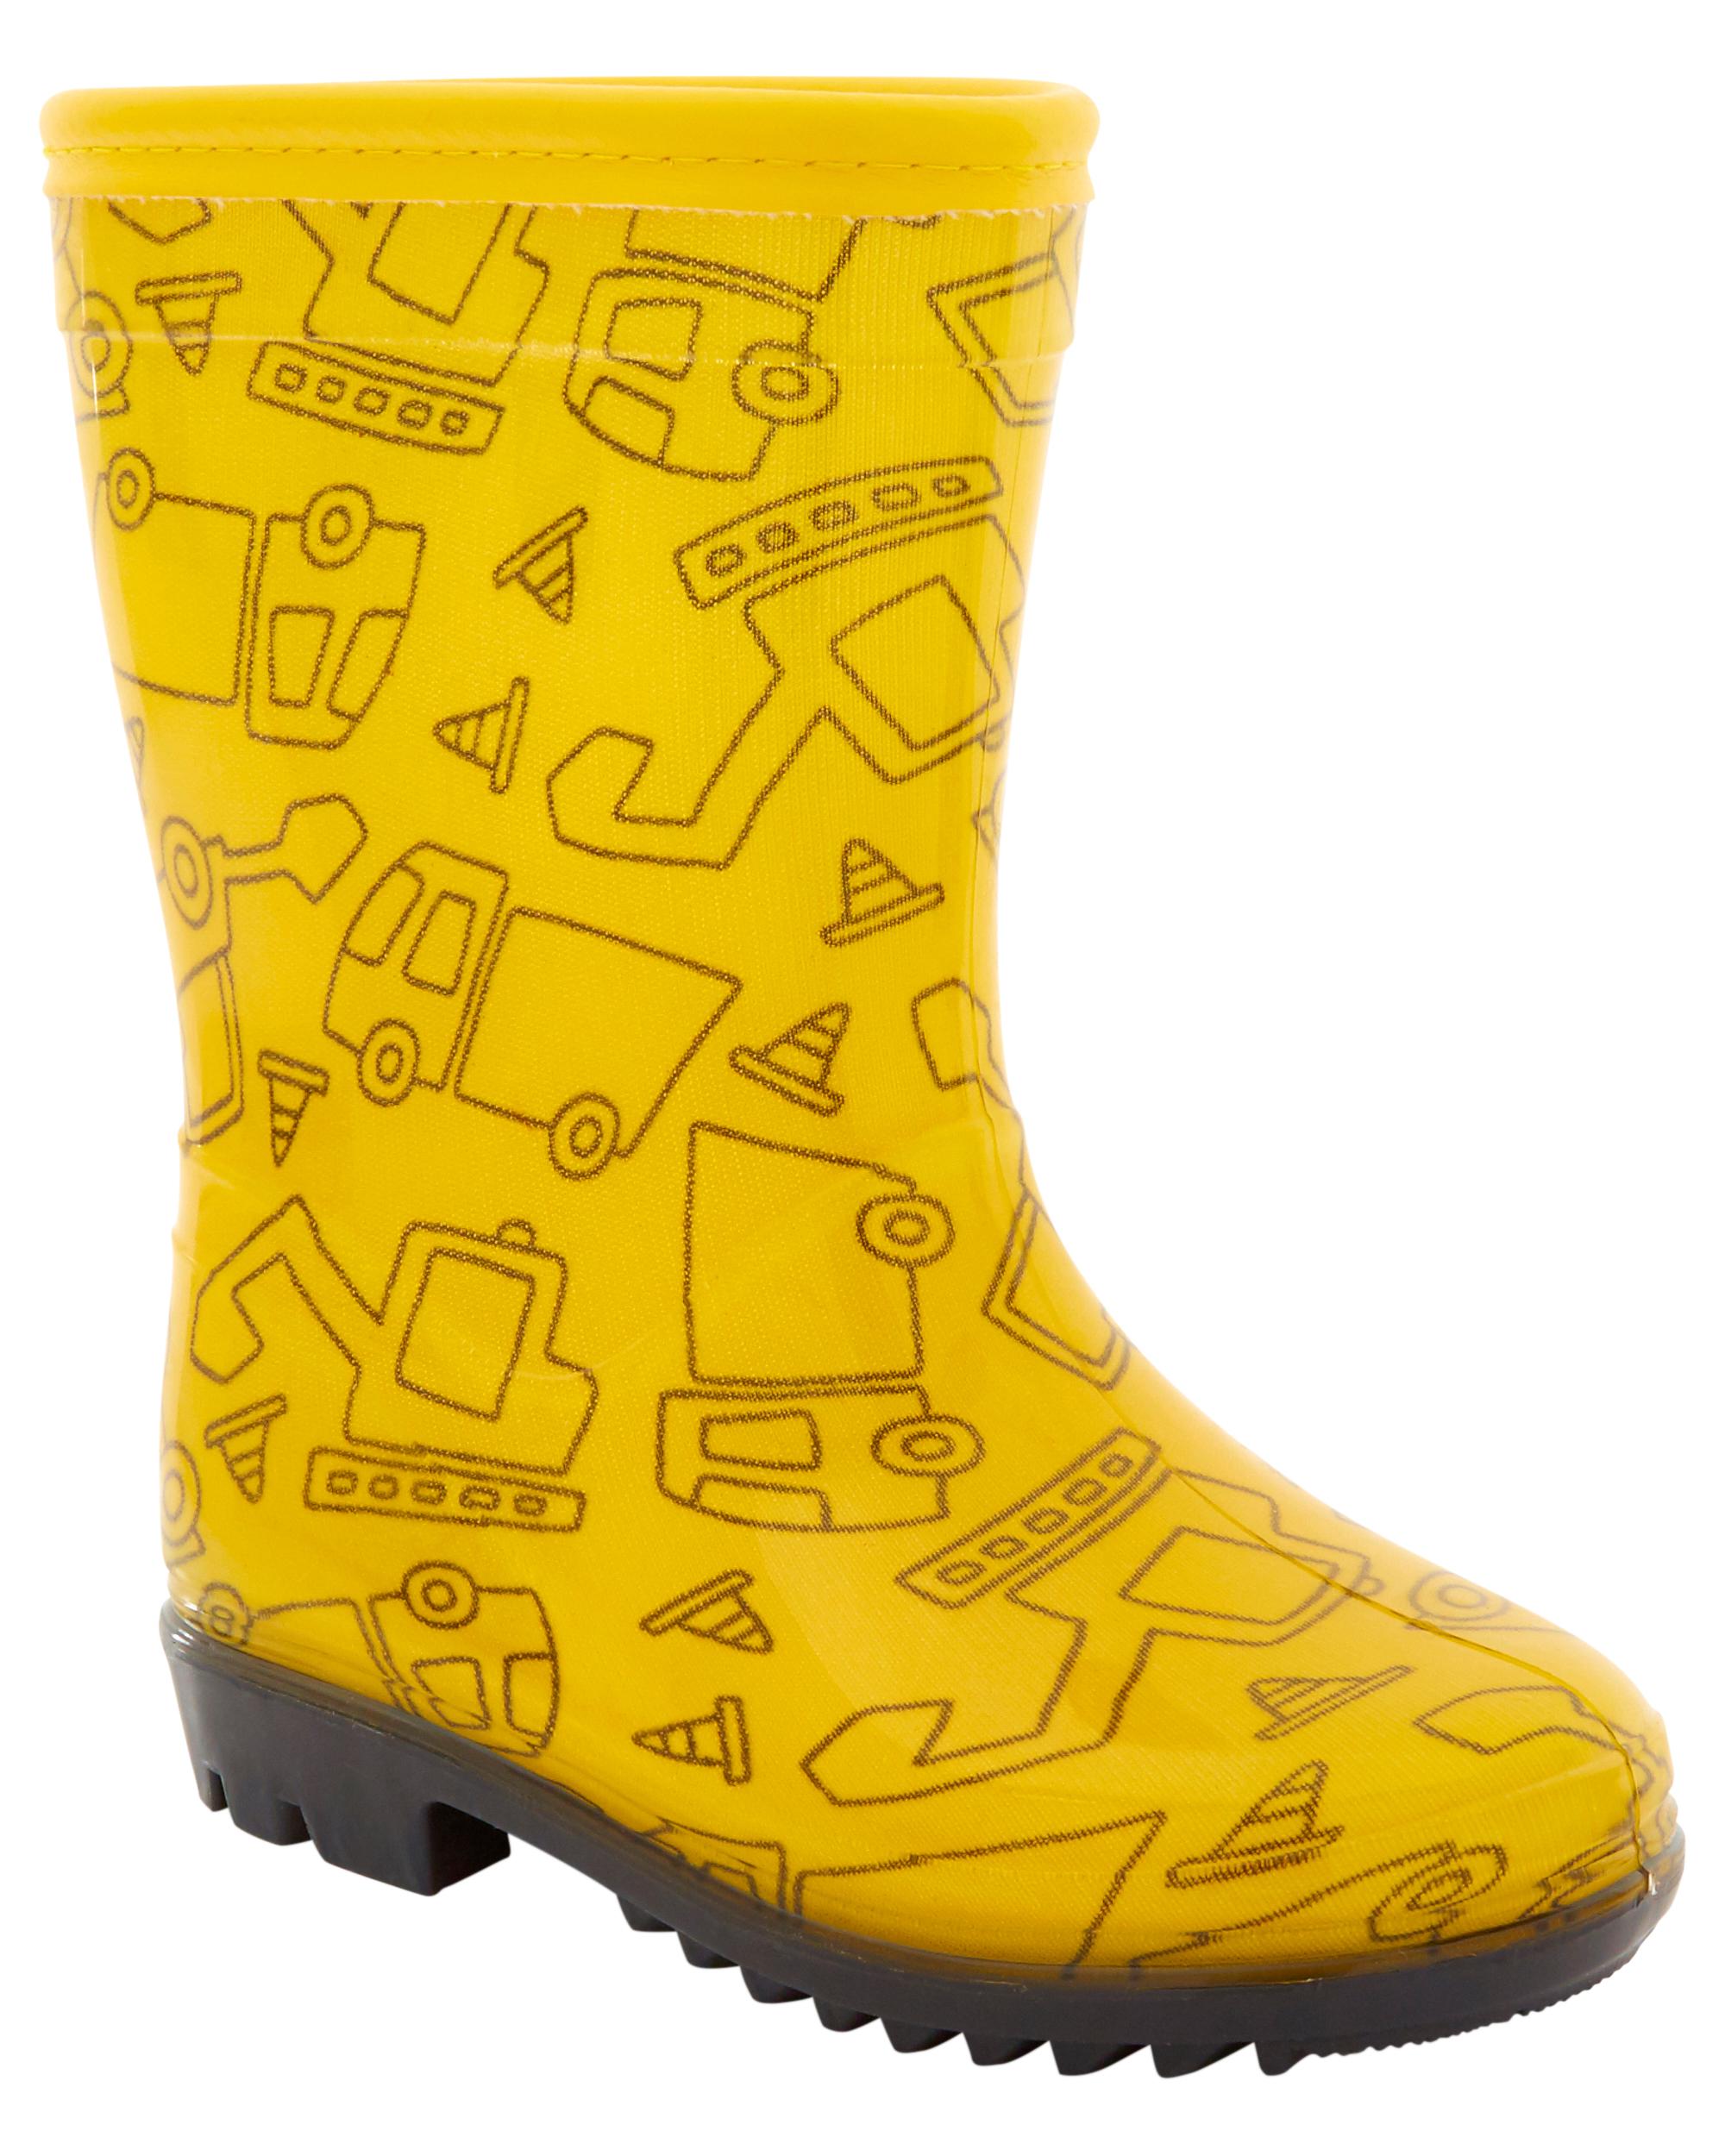 Toddler Construction Print Rain Boots